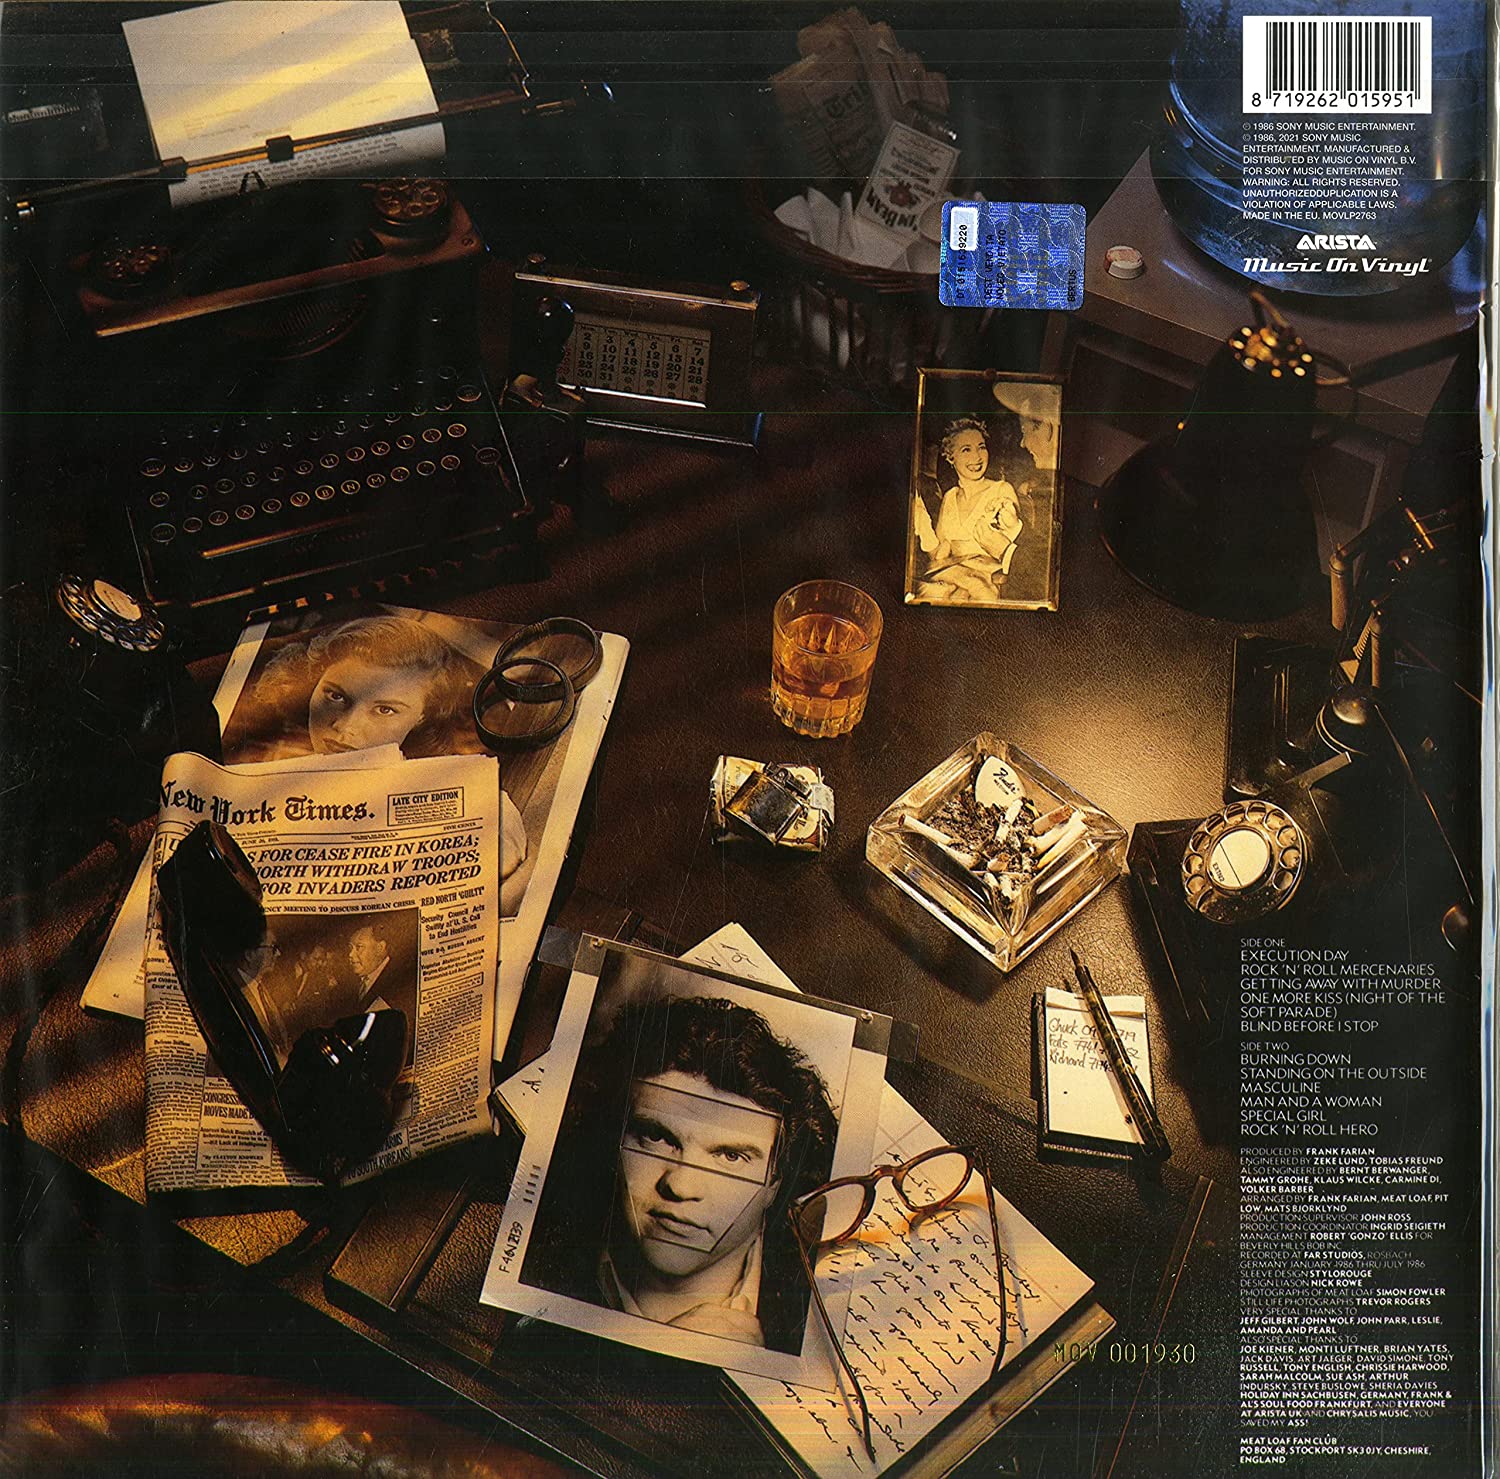 Motley Crue-Soundtrack - The Dirt Exclusive 2LP (Split) Color Vinyl